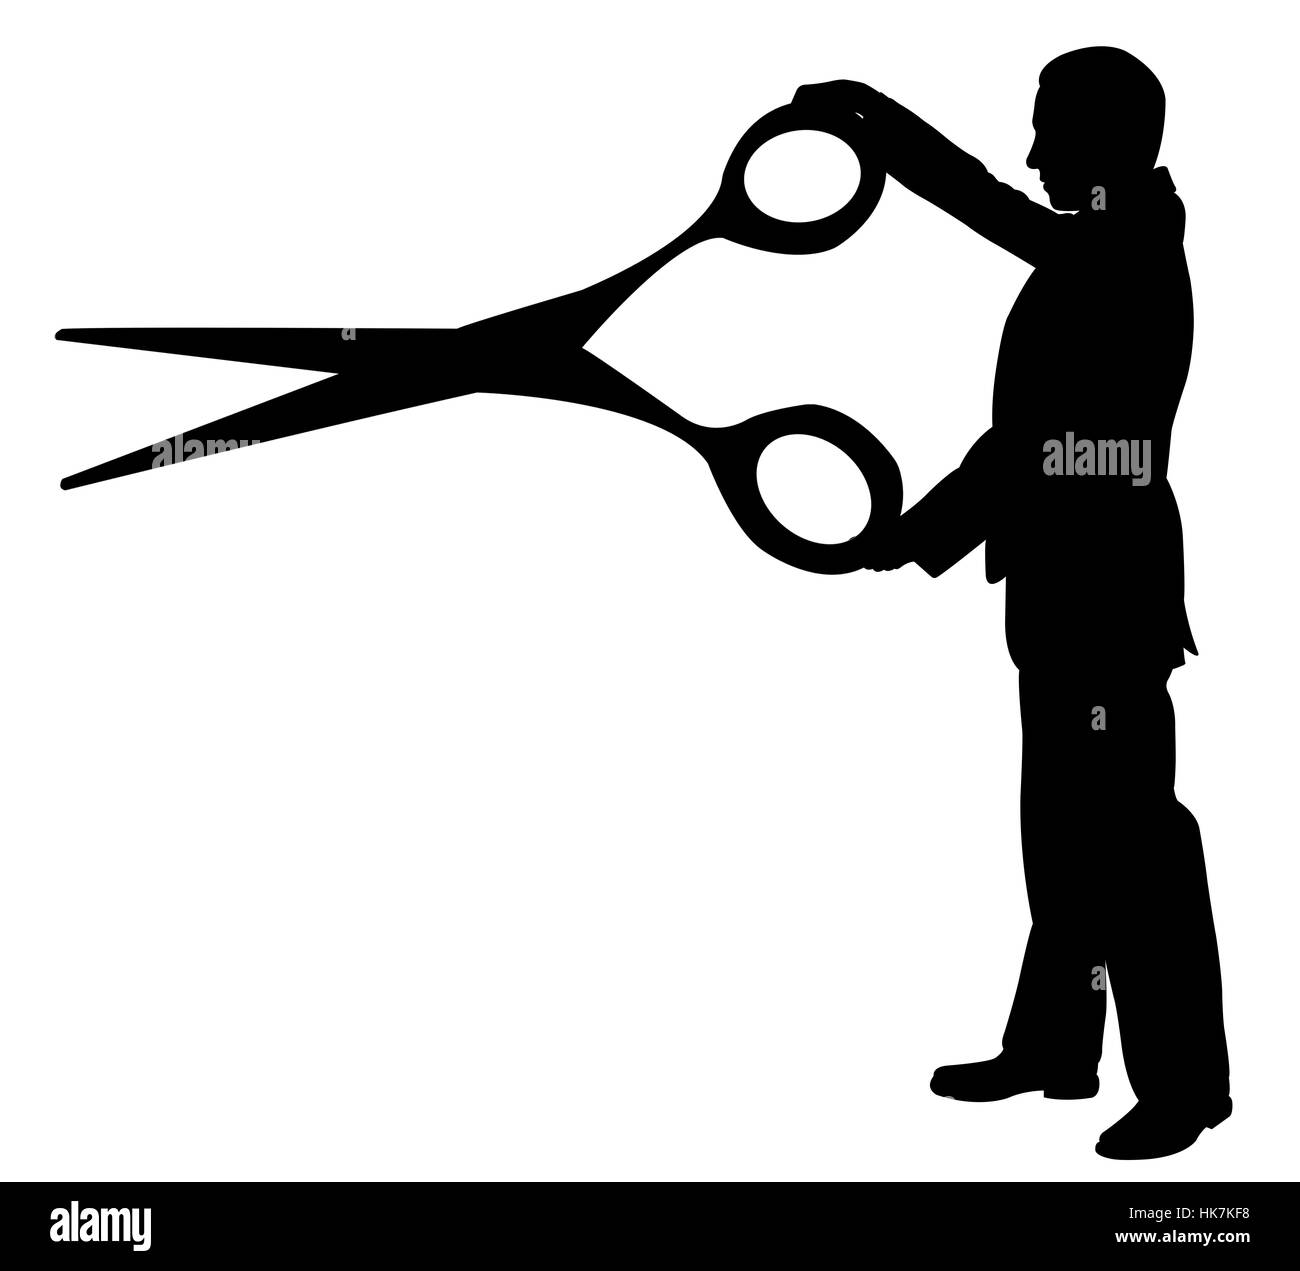 https://c8.alamy.com/comp/HK7KF8/illustration-of-man-with-big-scissors-HK7KF8.jpg